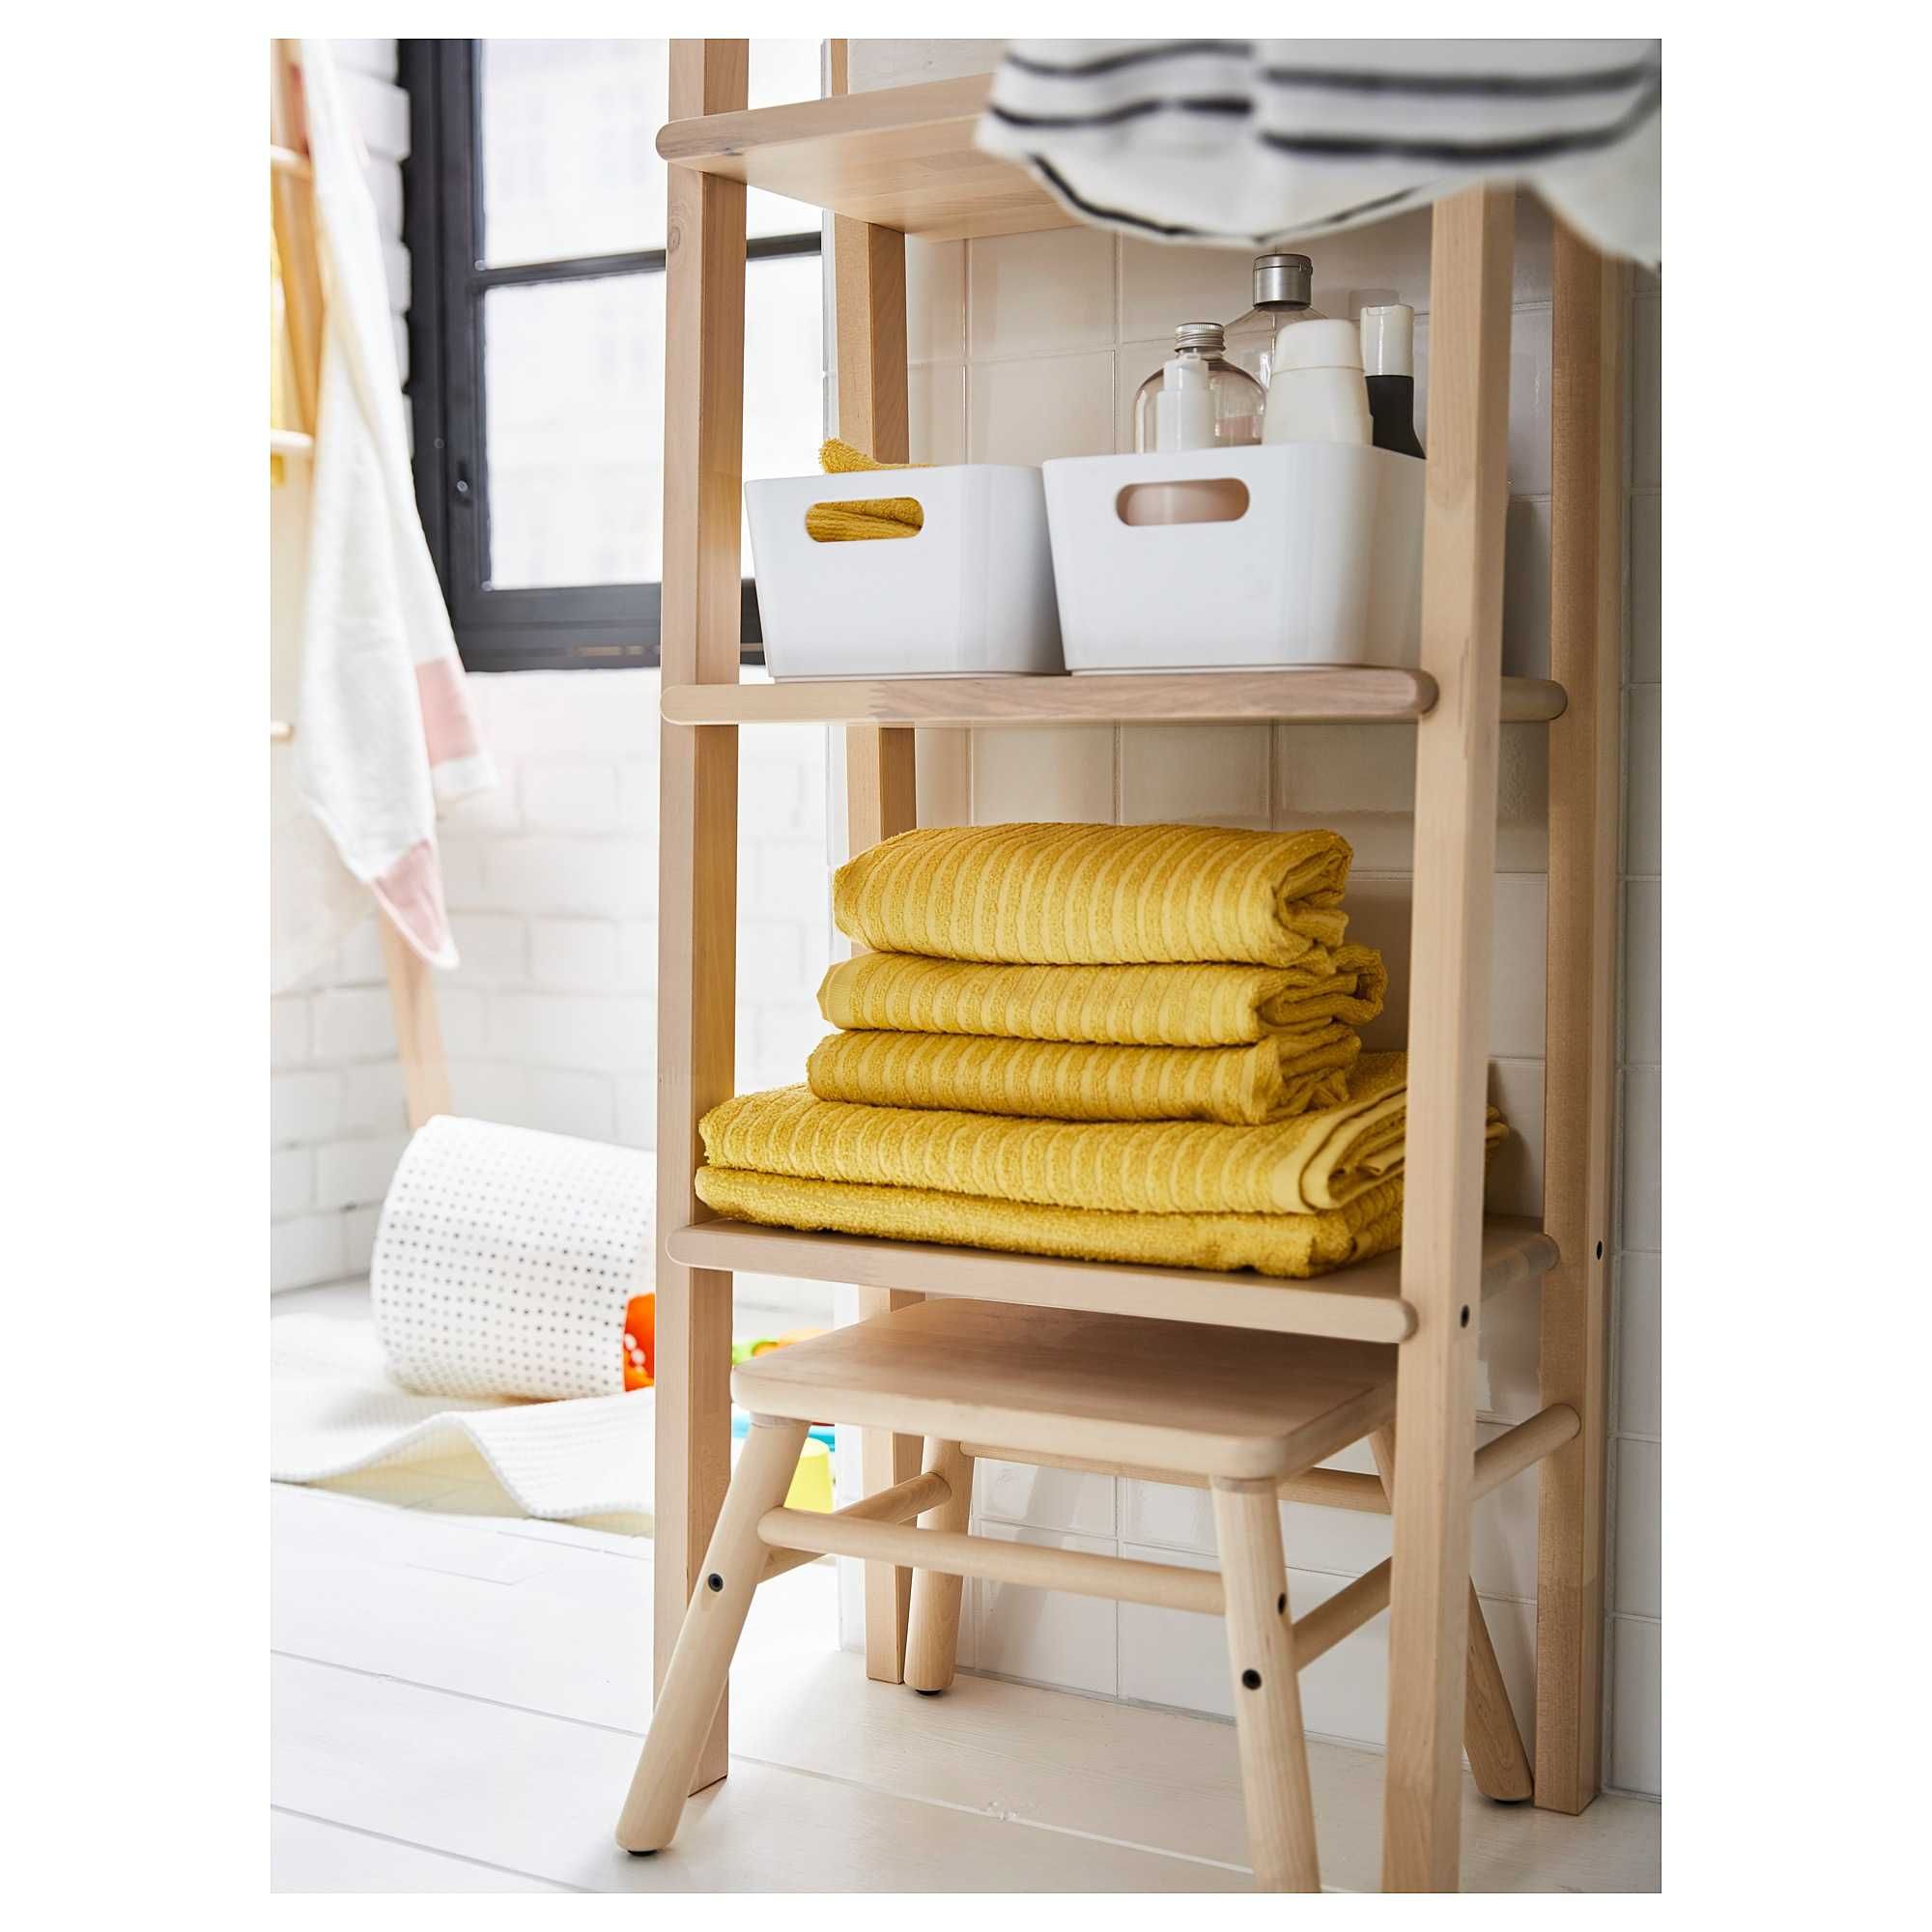 Подставка-табурет IKEA VILTO береза, стул-лестница со ступенькой 25 см